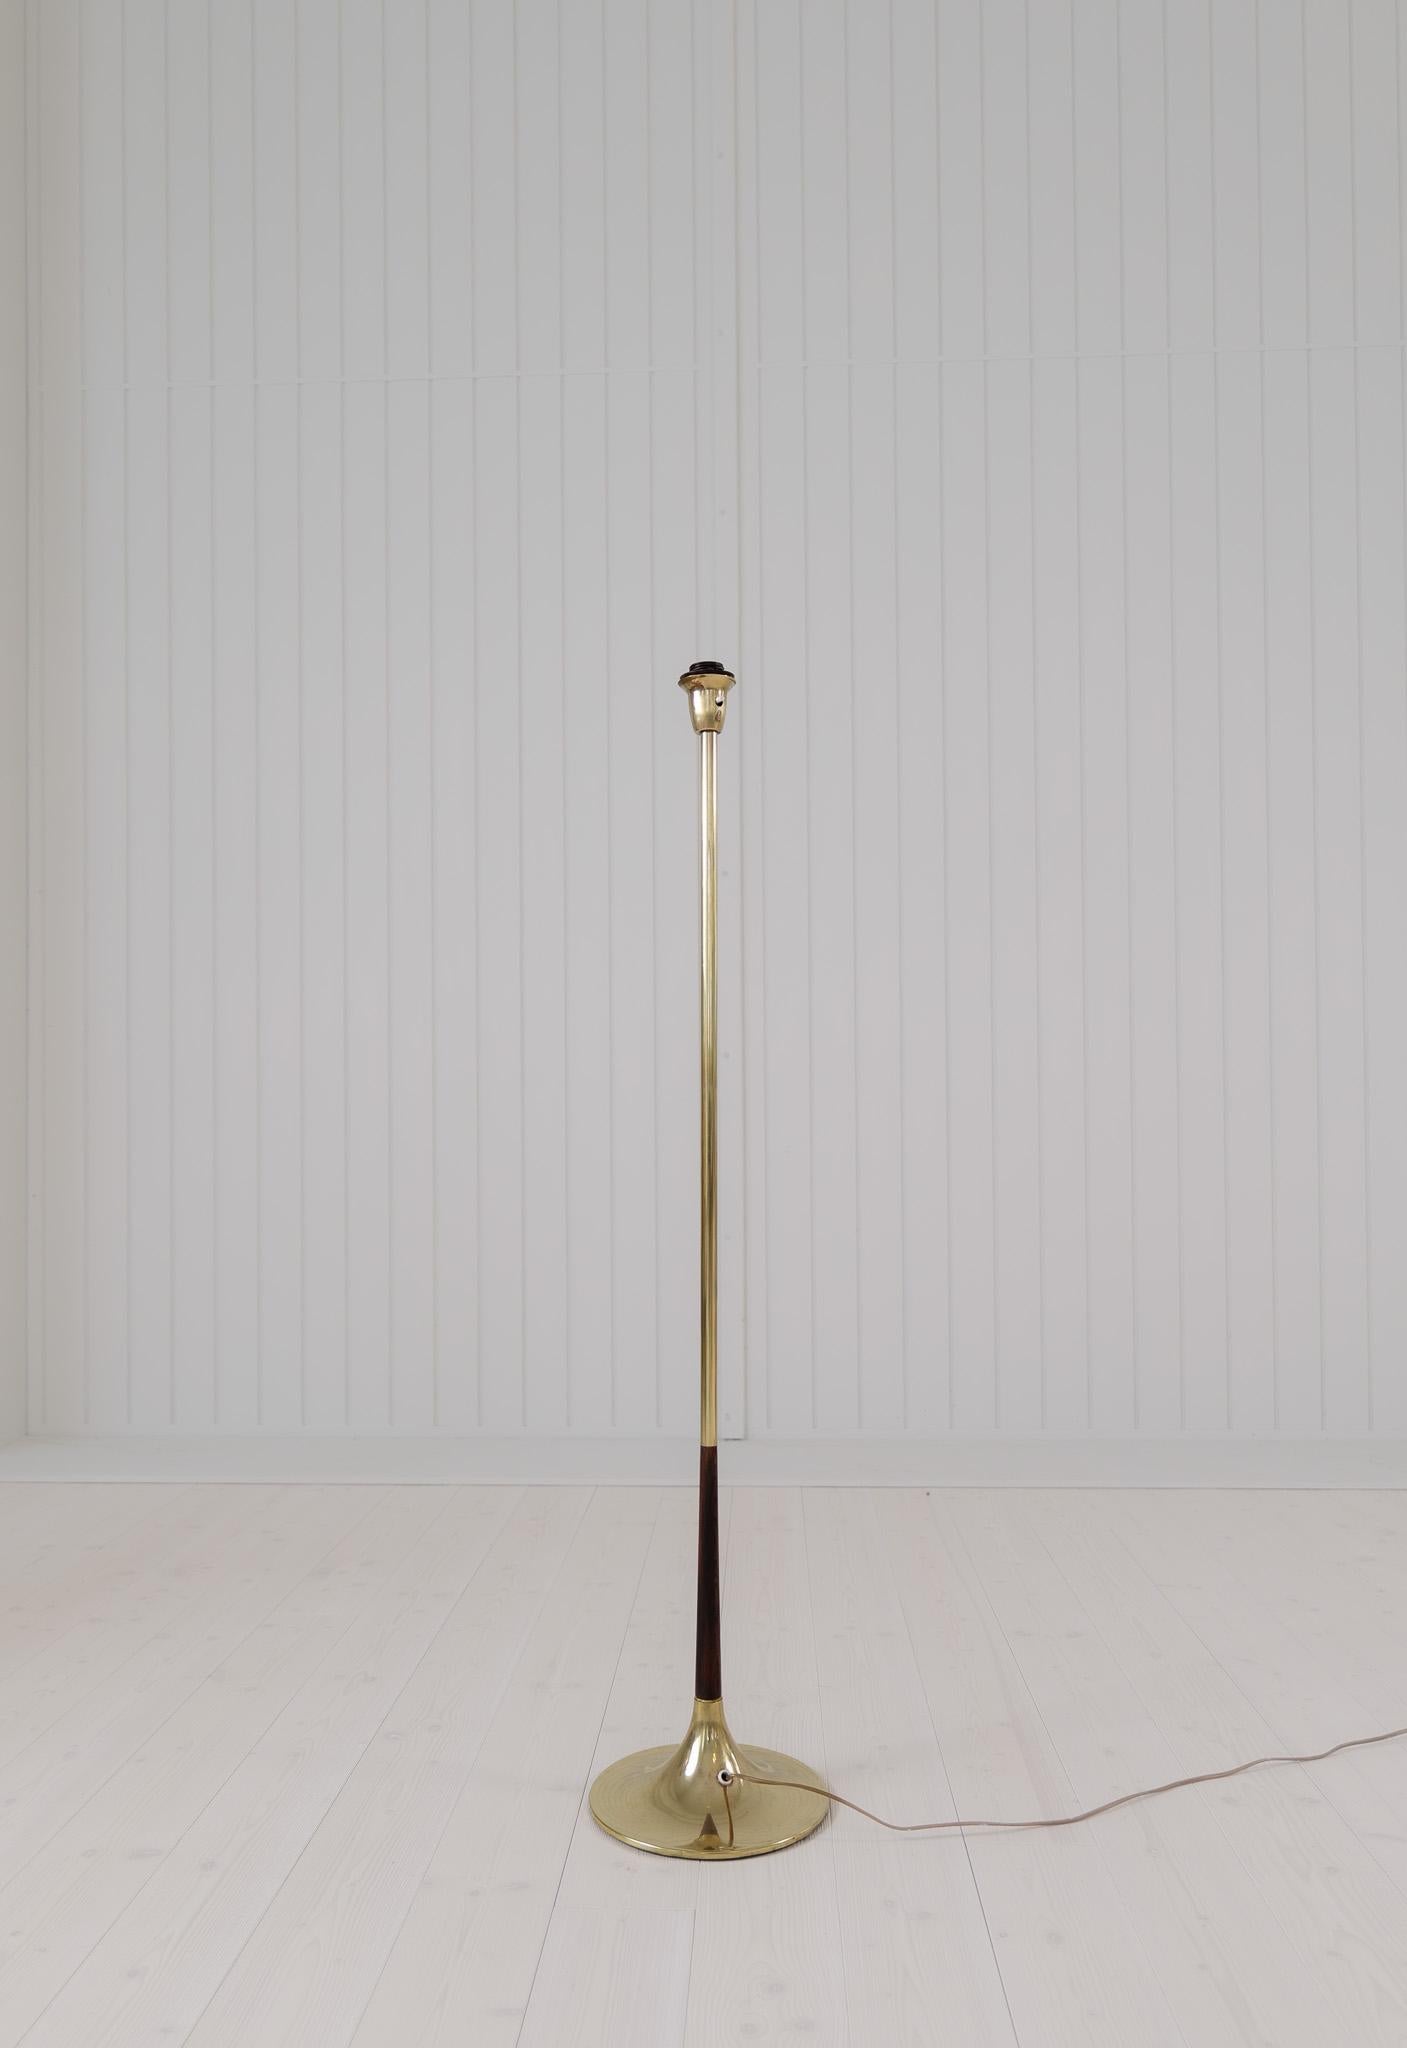 Midcentury Modern Trumpet Shaped Brass Floor Lamp, Sweden, 1960s For Sale 7